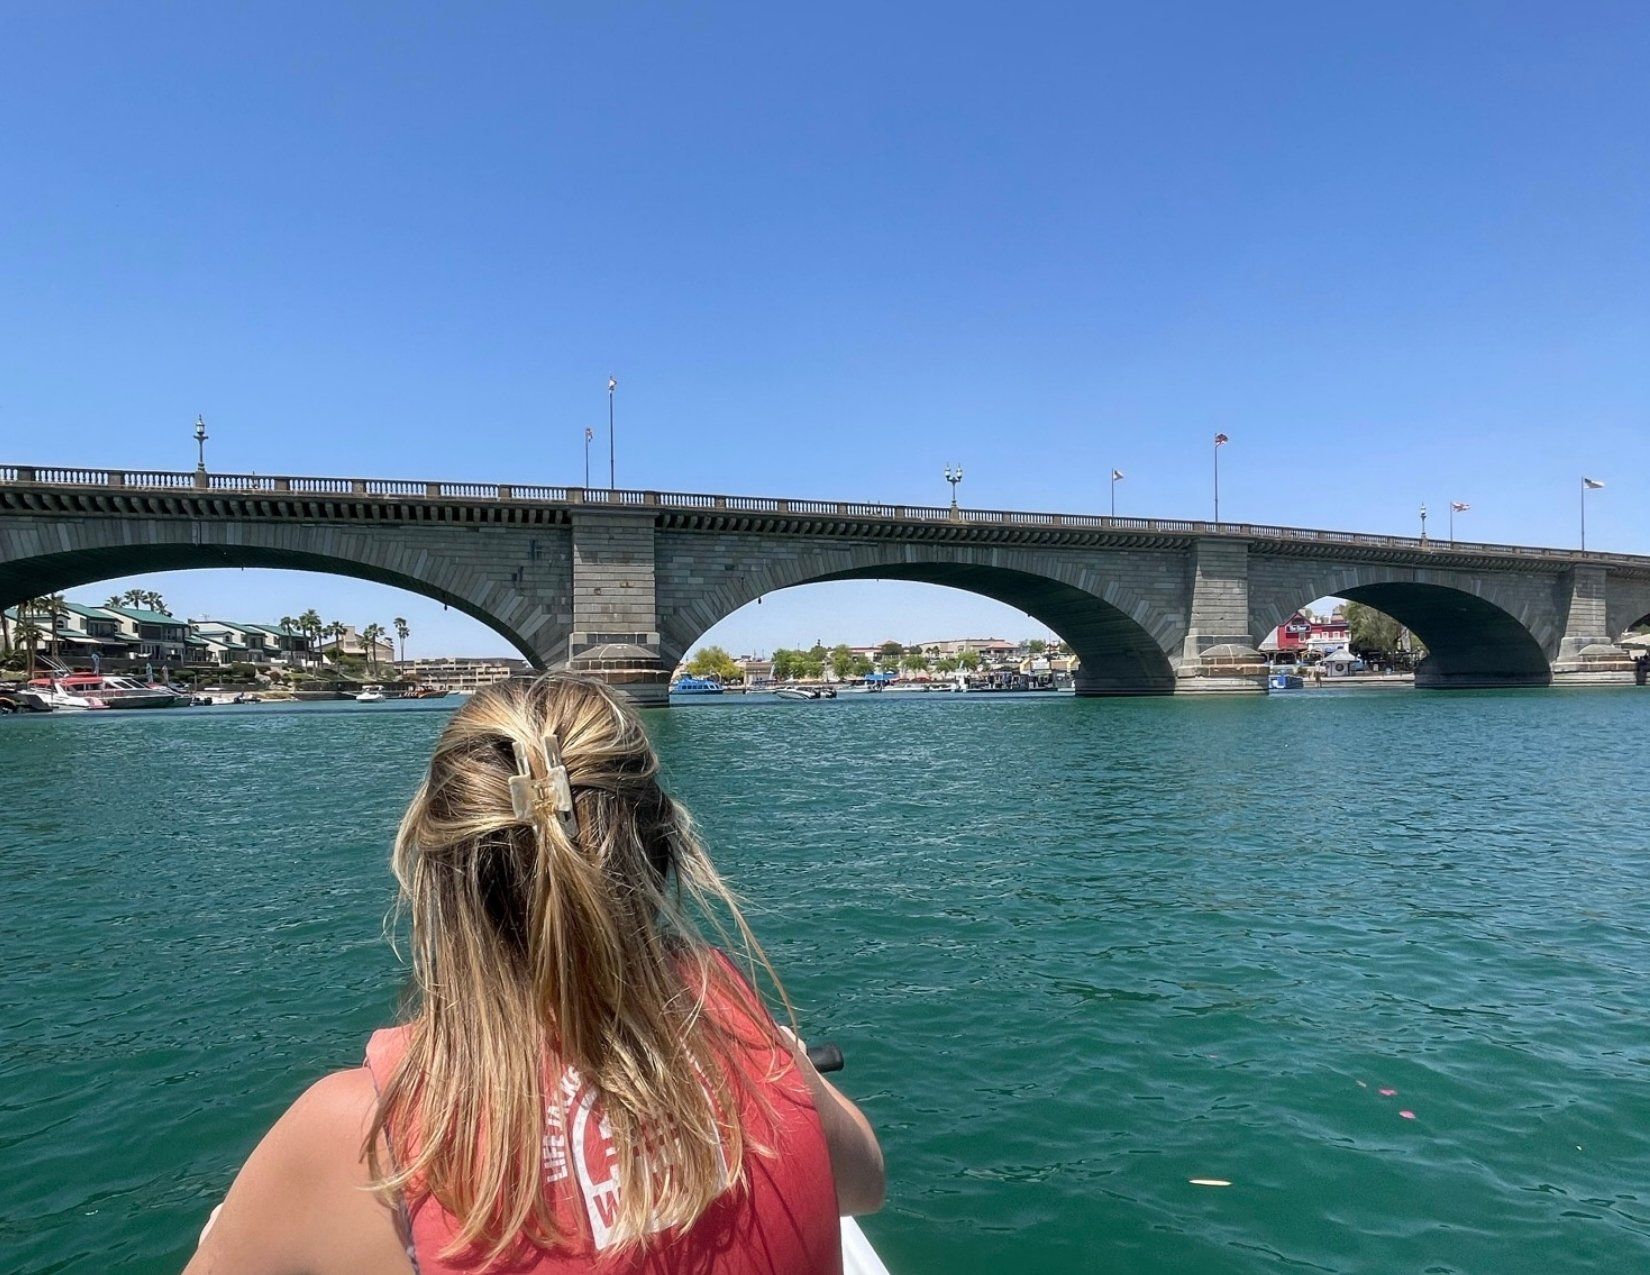 iconic bridge over Lake Havasu in Arizona, blue waters, girl with blonde hair on a jet ski